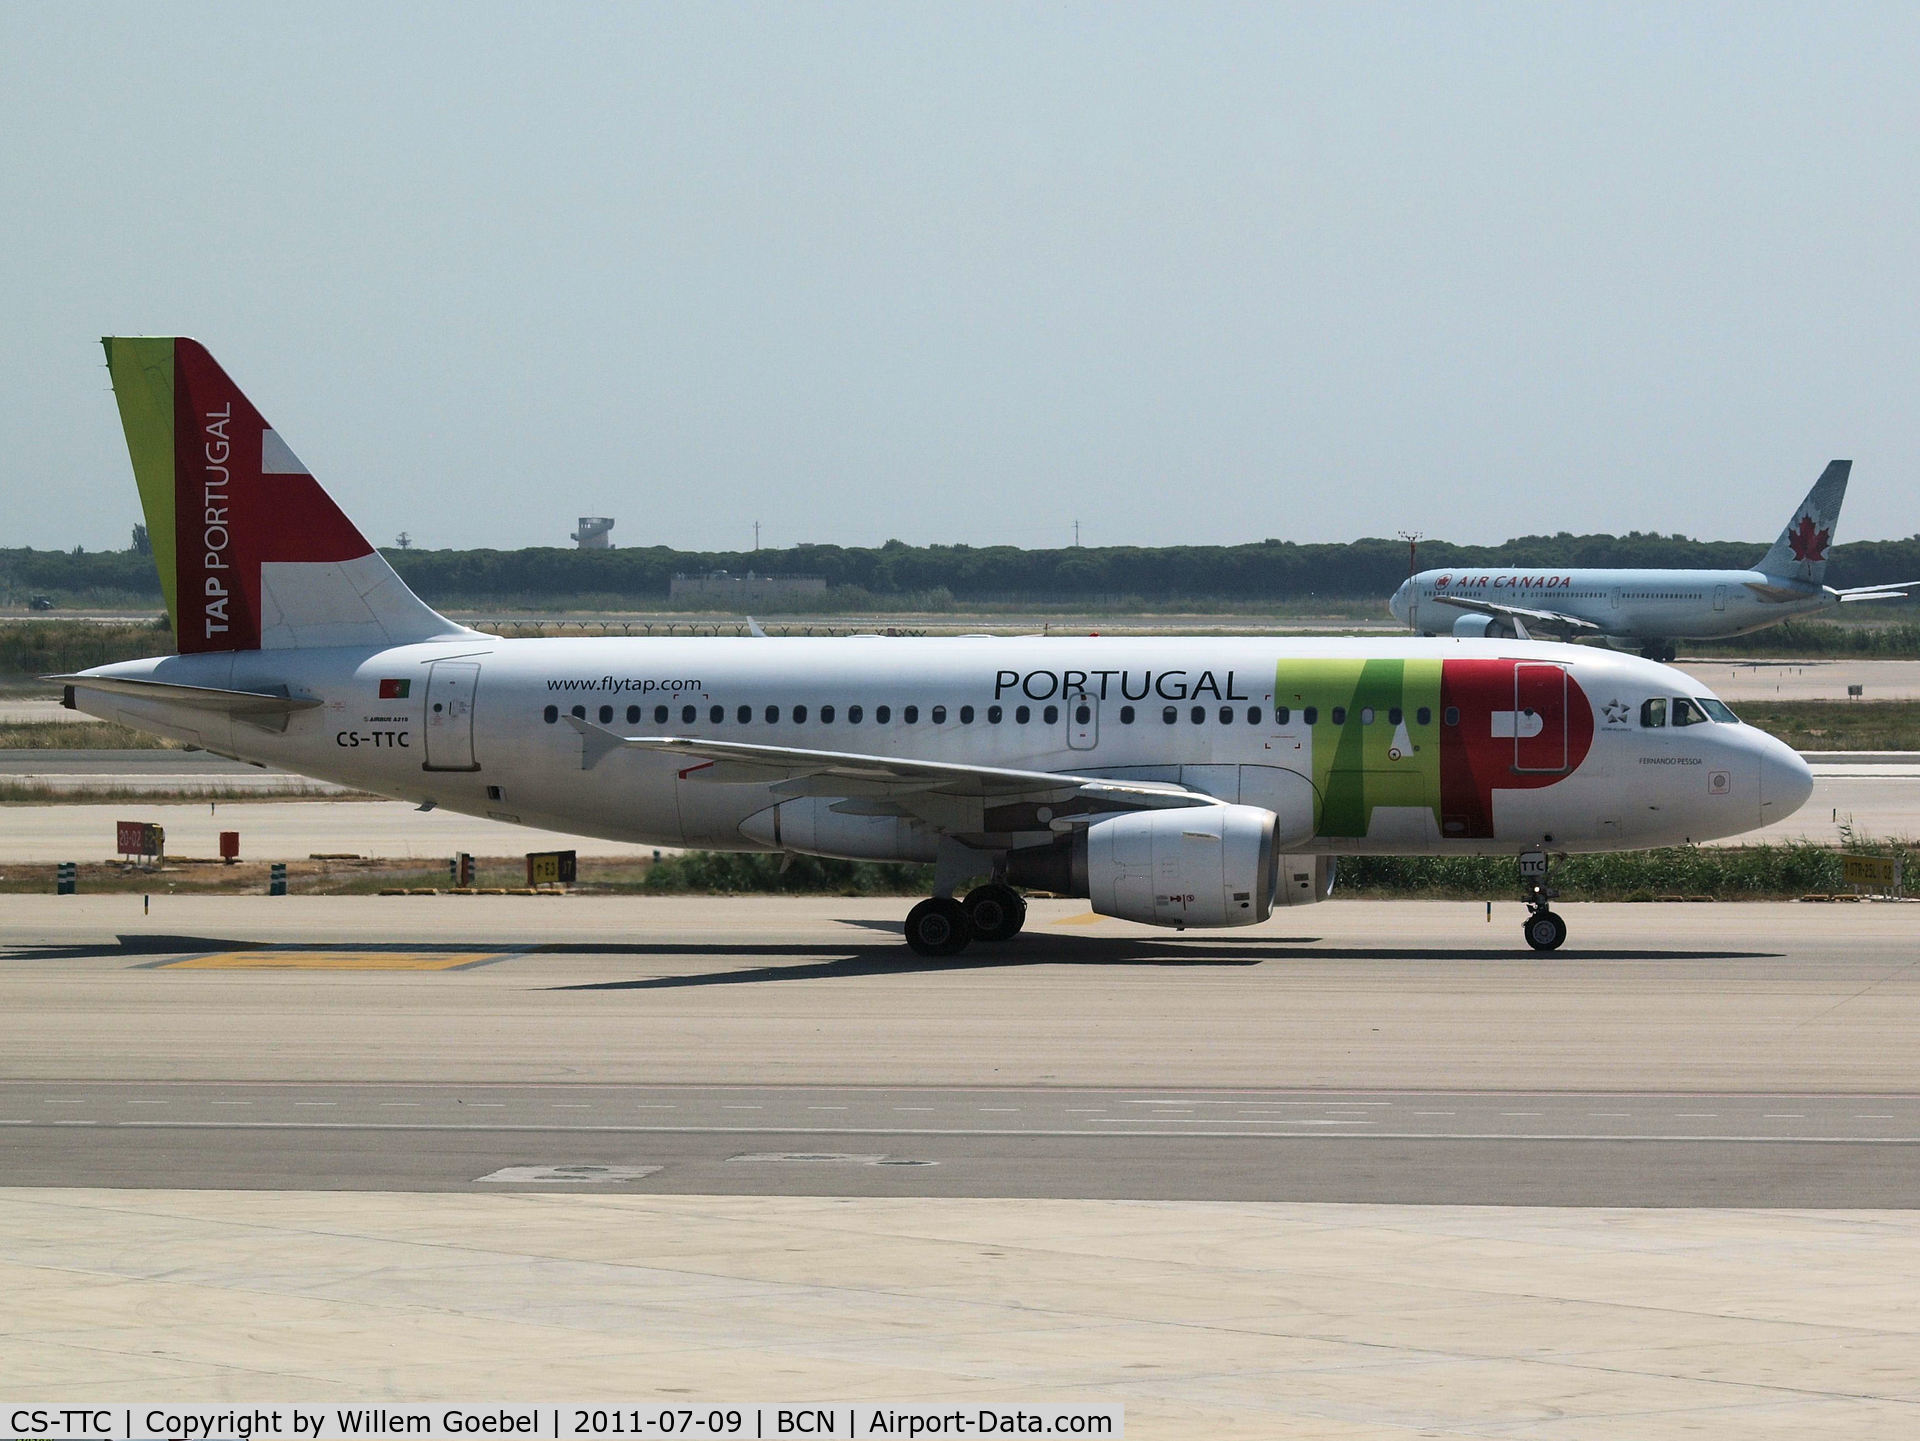 CS-TTC, 1997 Airbus A319-111 C/N 763, Arrival on Barcelona Airport